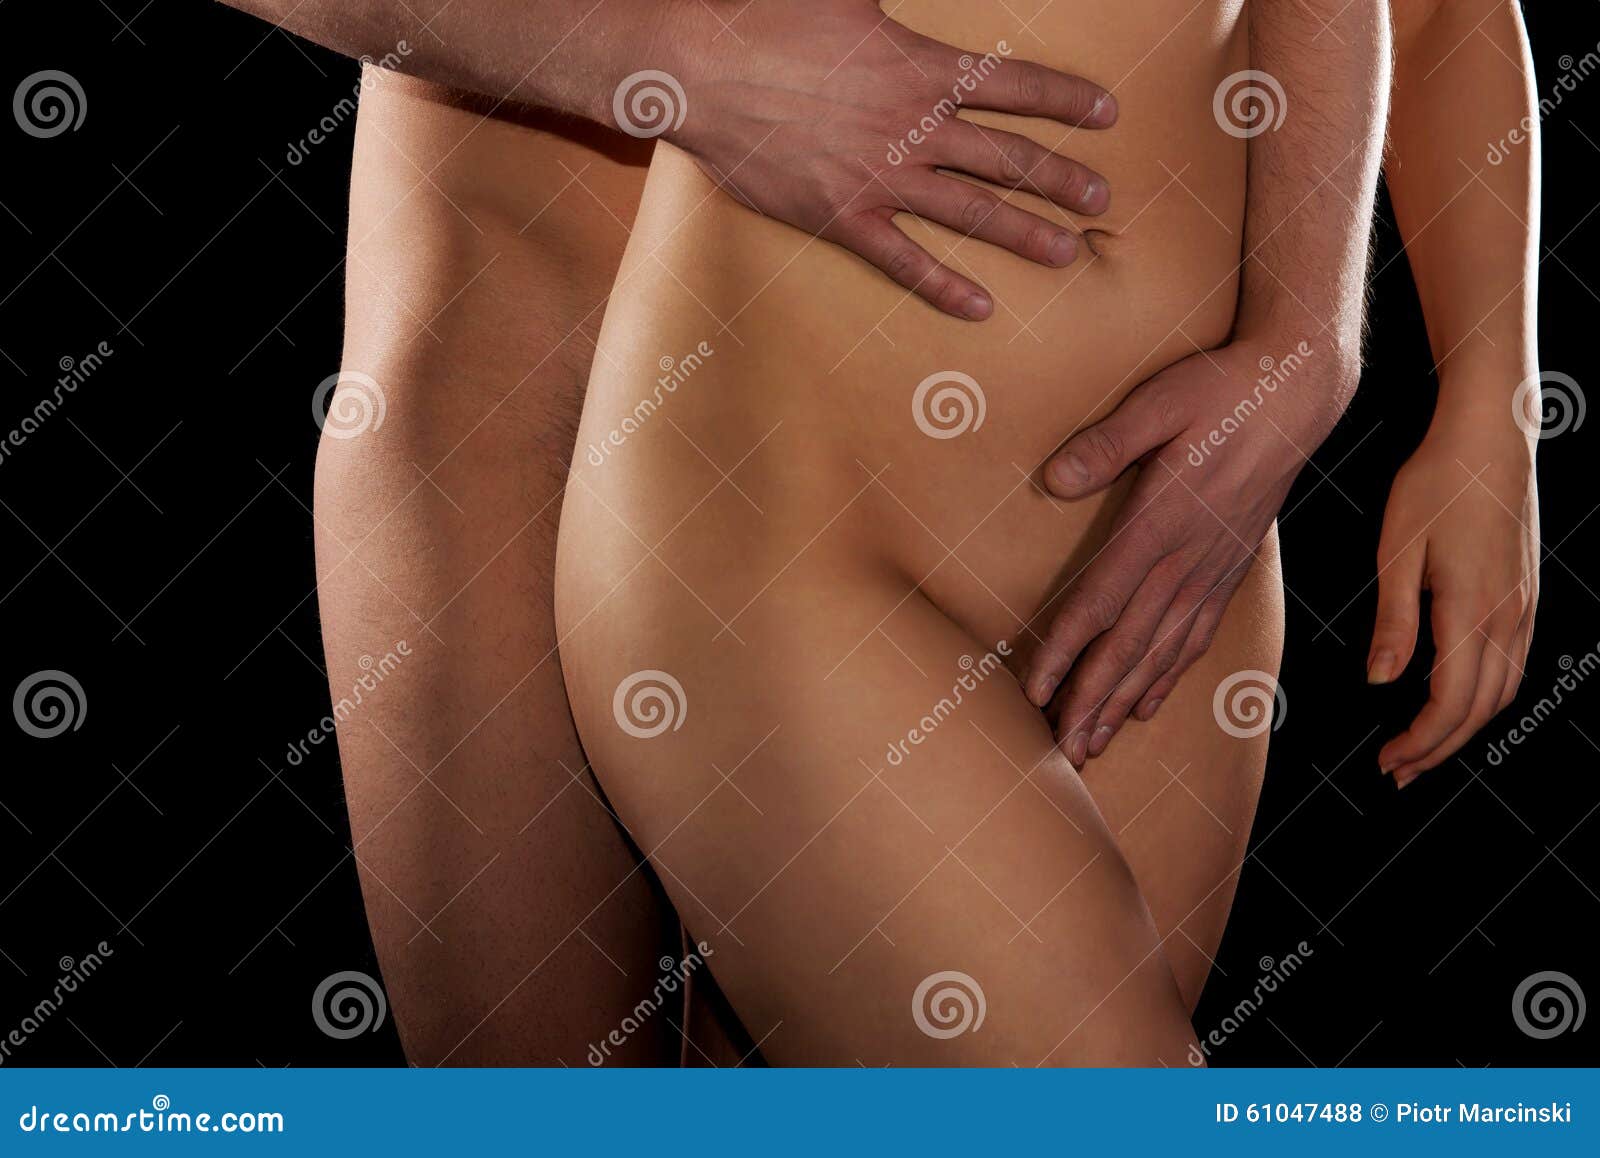 Girl Touching Her Body Naked